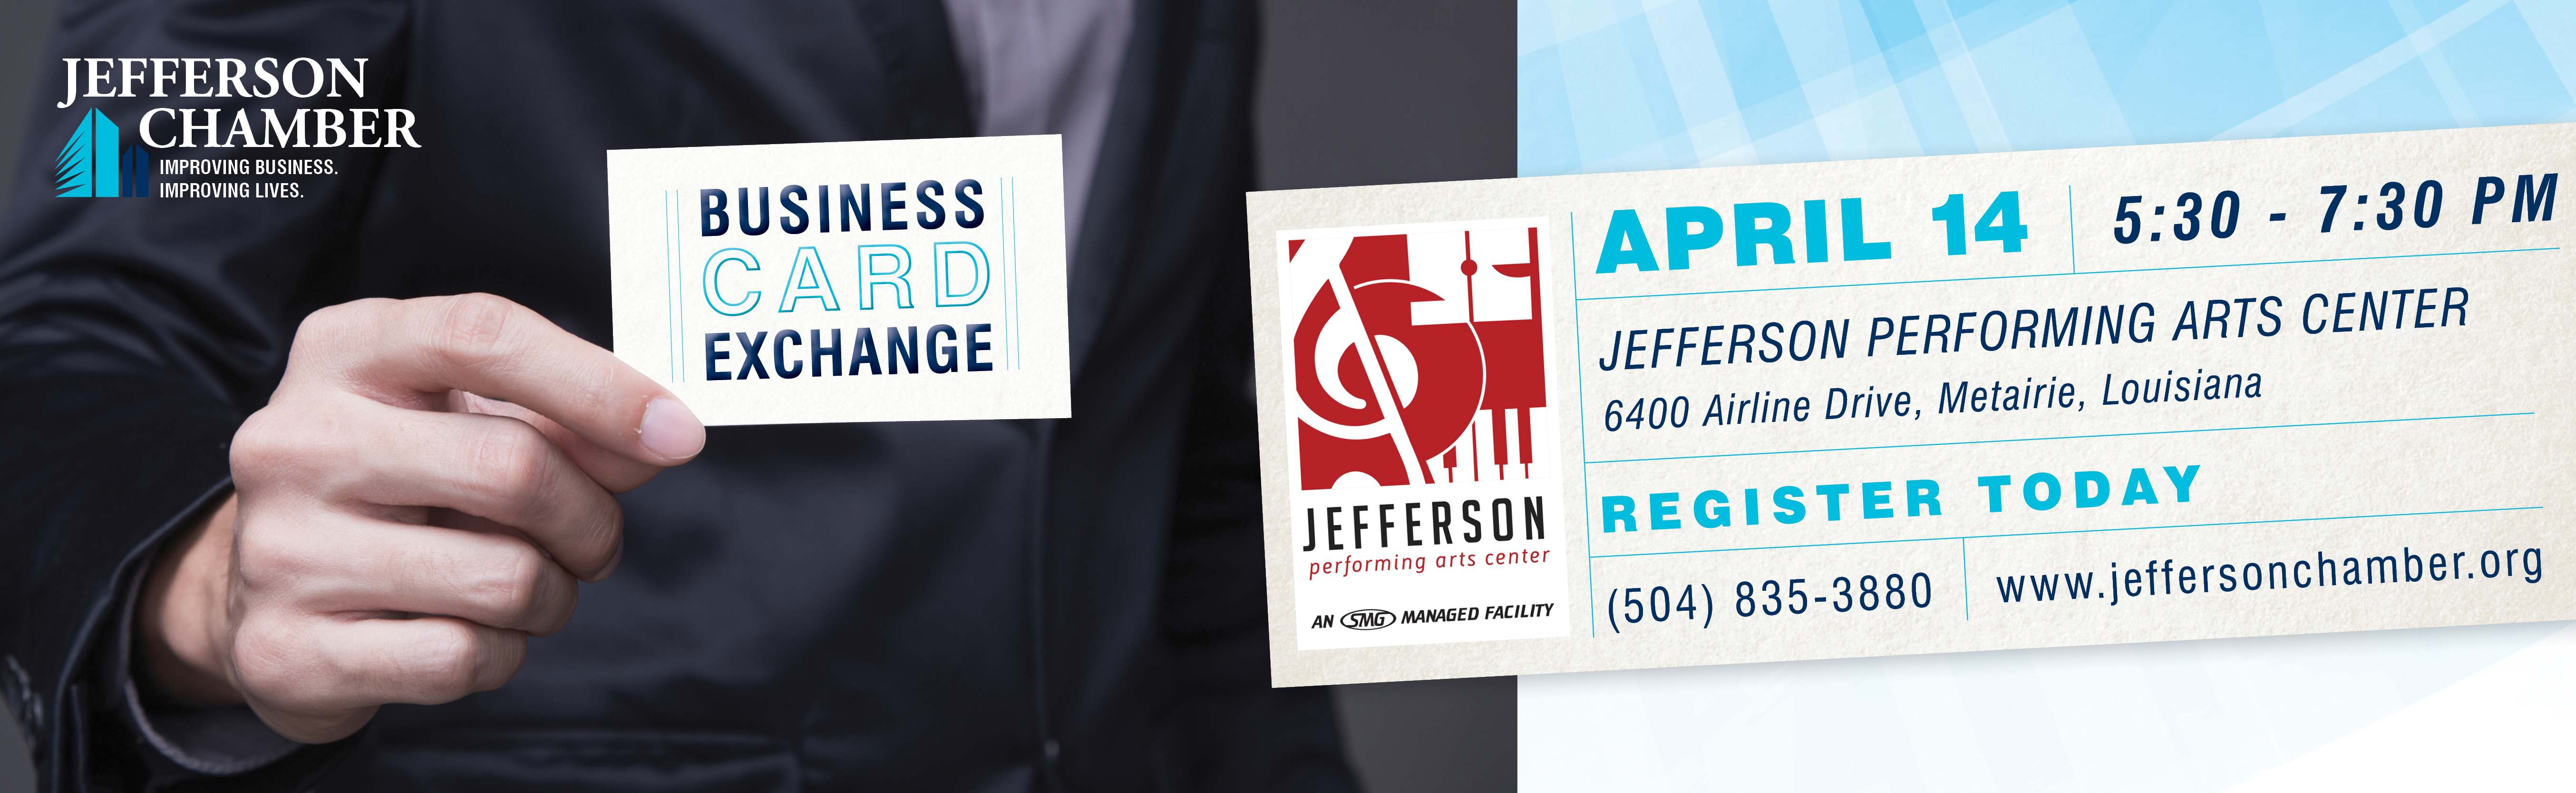 Jefferson Chamber of Commerce Improving Business, Improving Lives